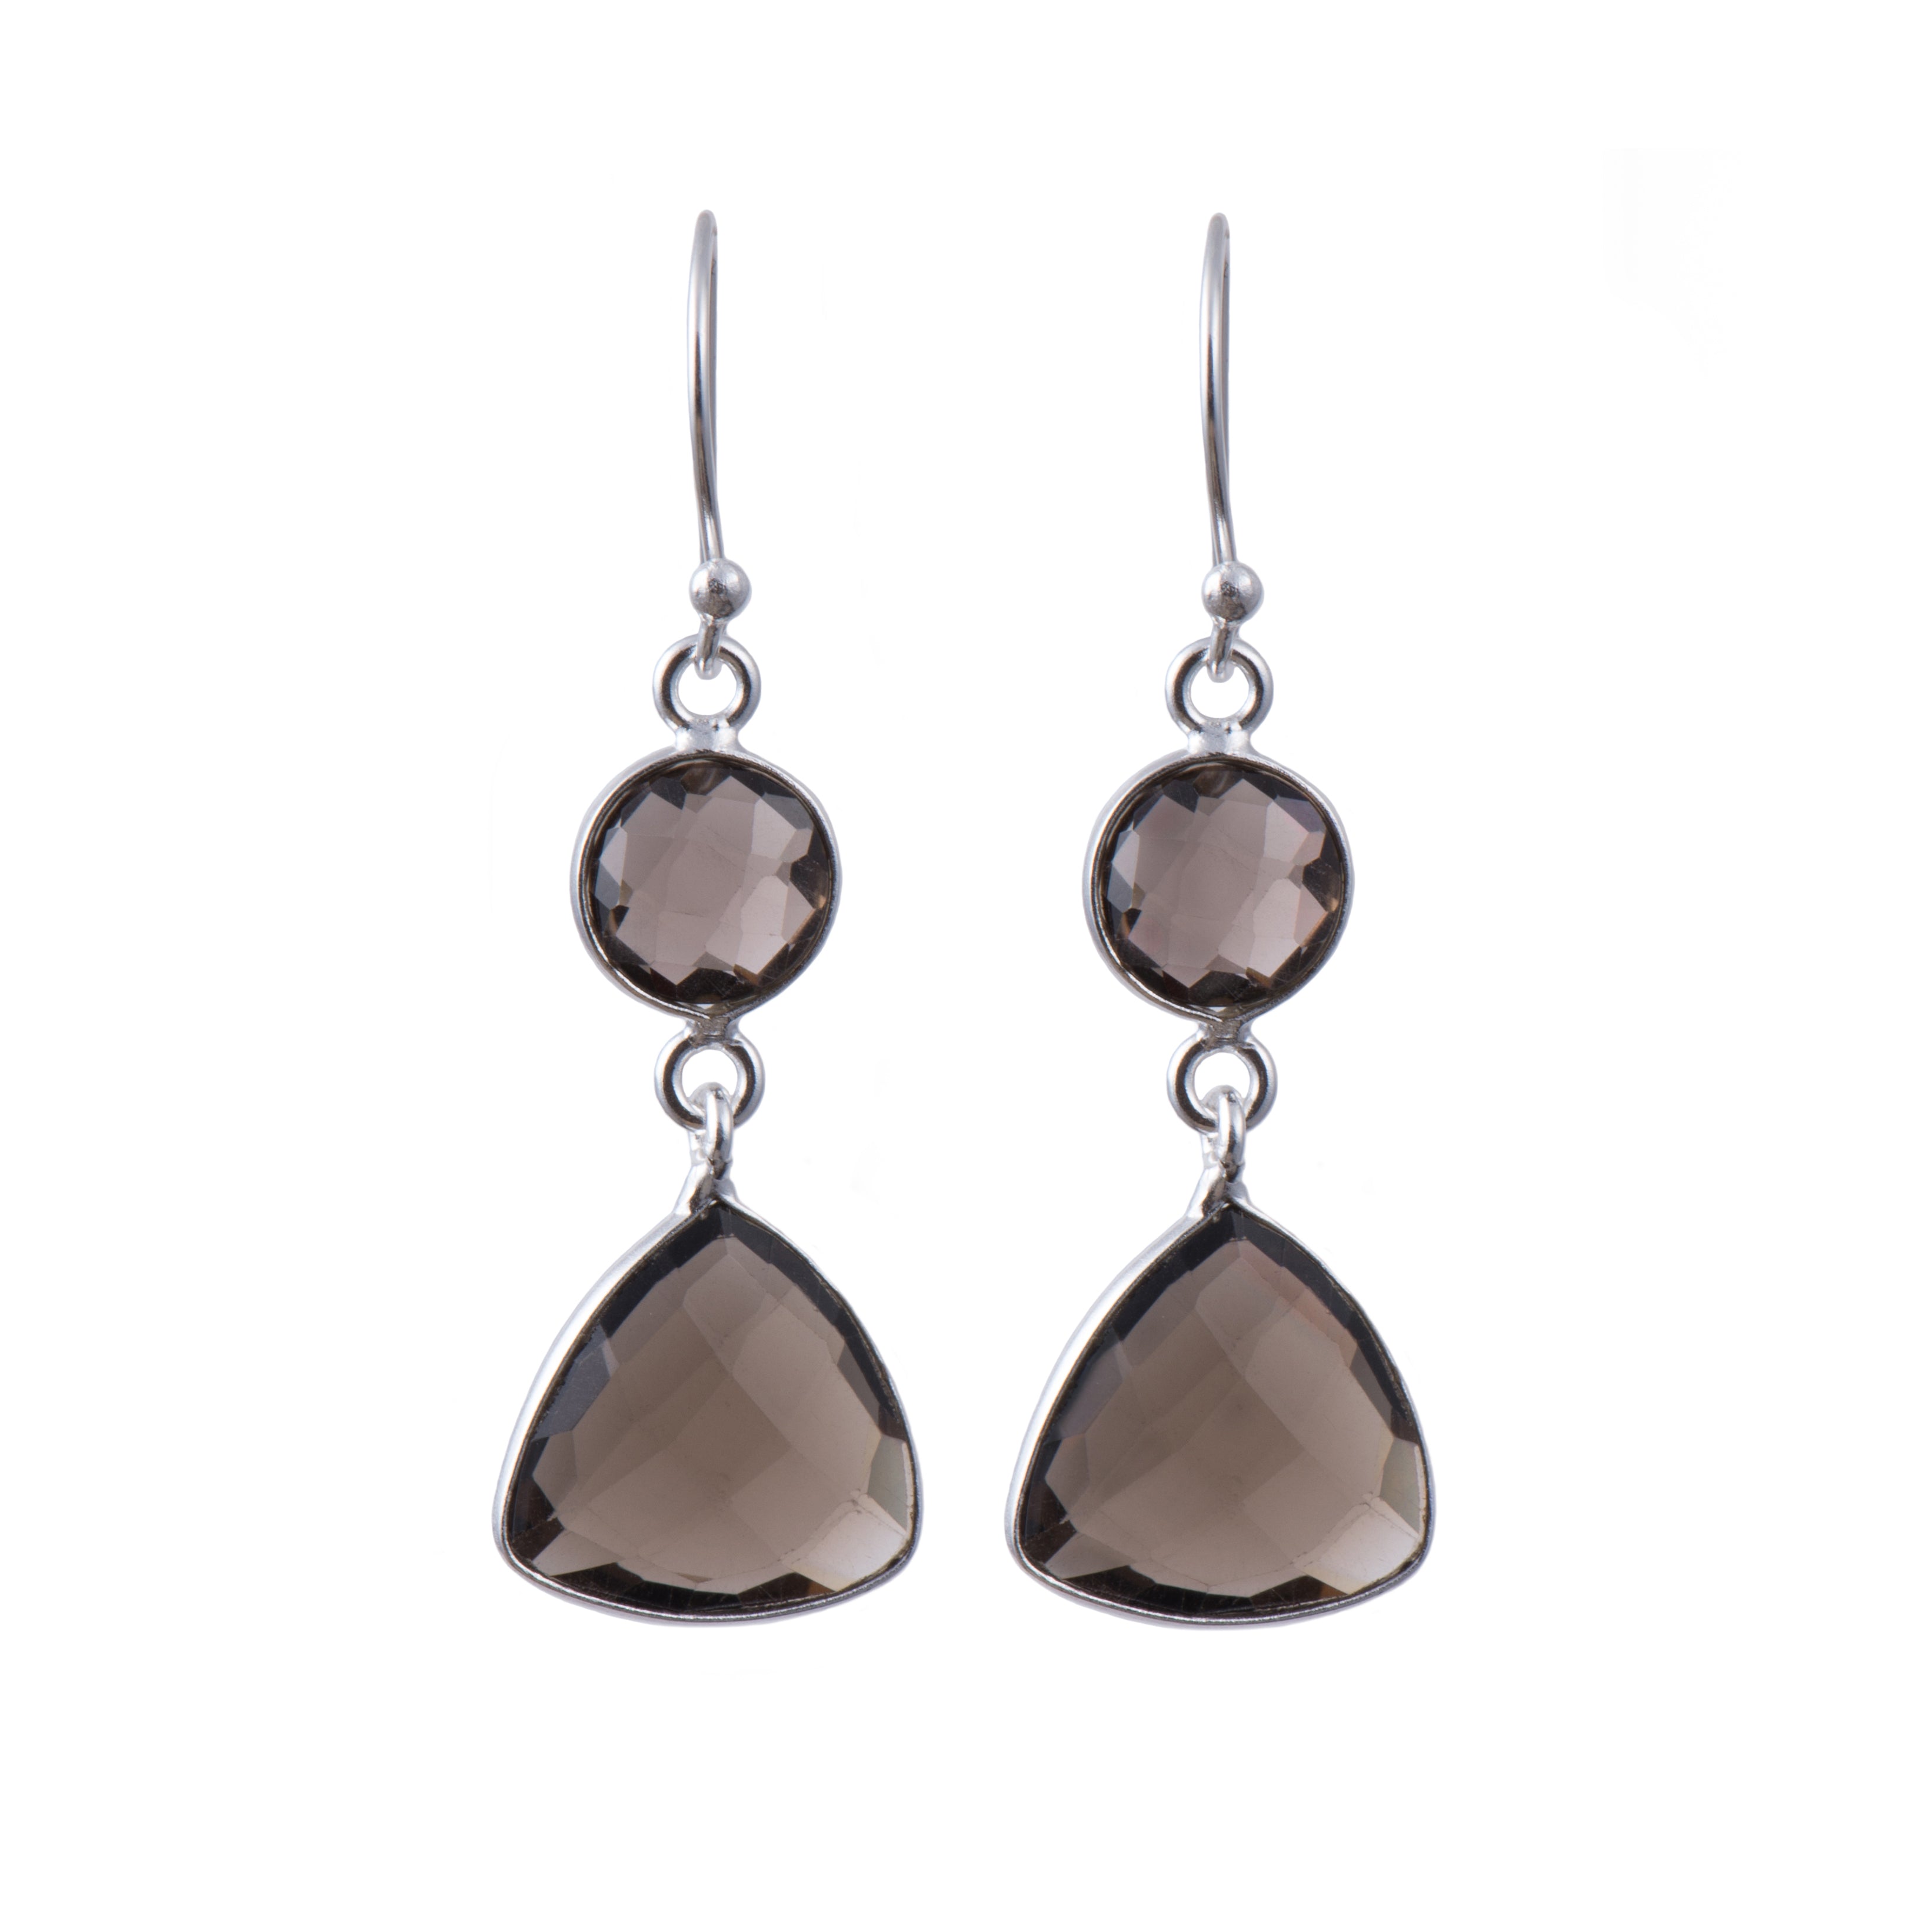 Smoky Quartz Gemstone Earrings in Sterling Silver - Triangular